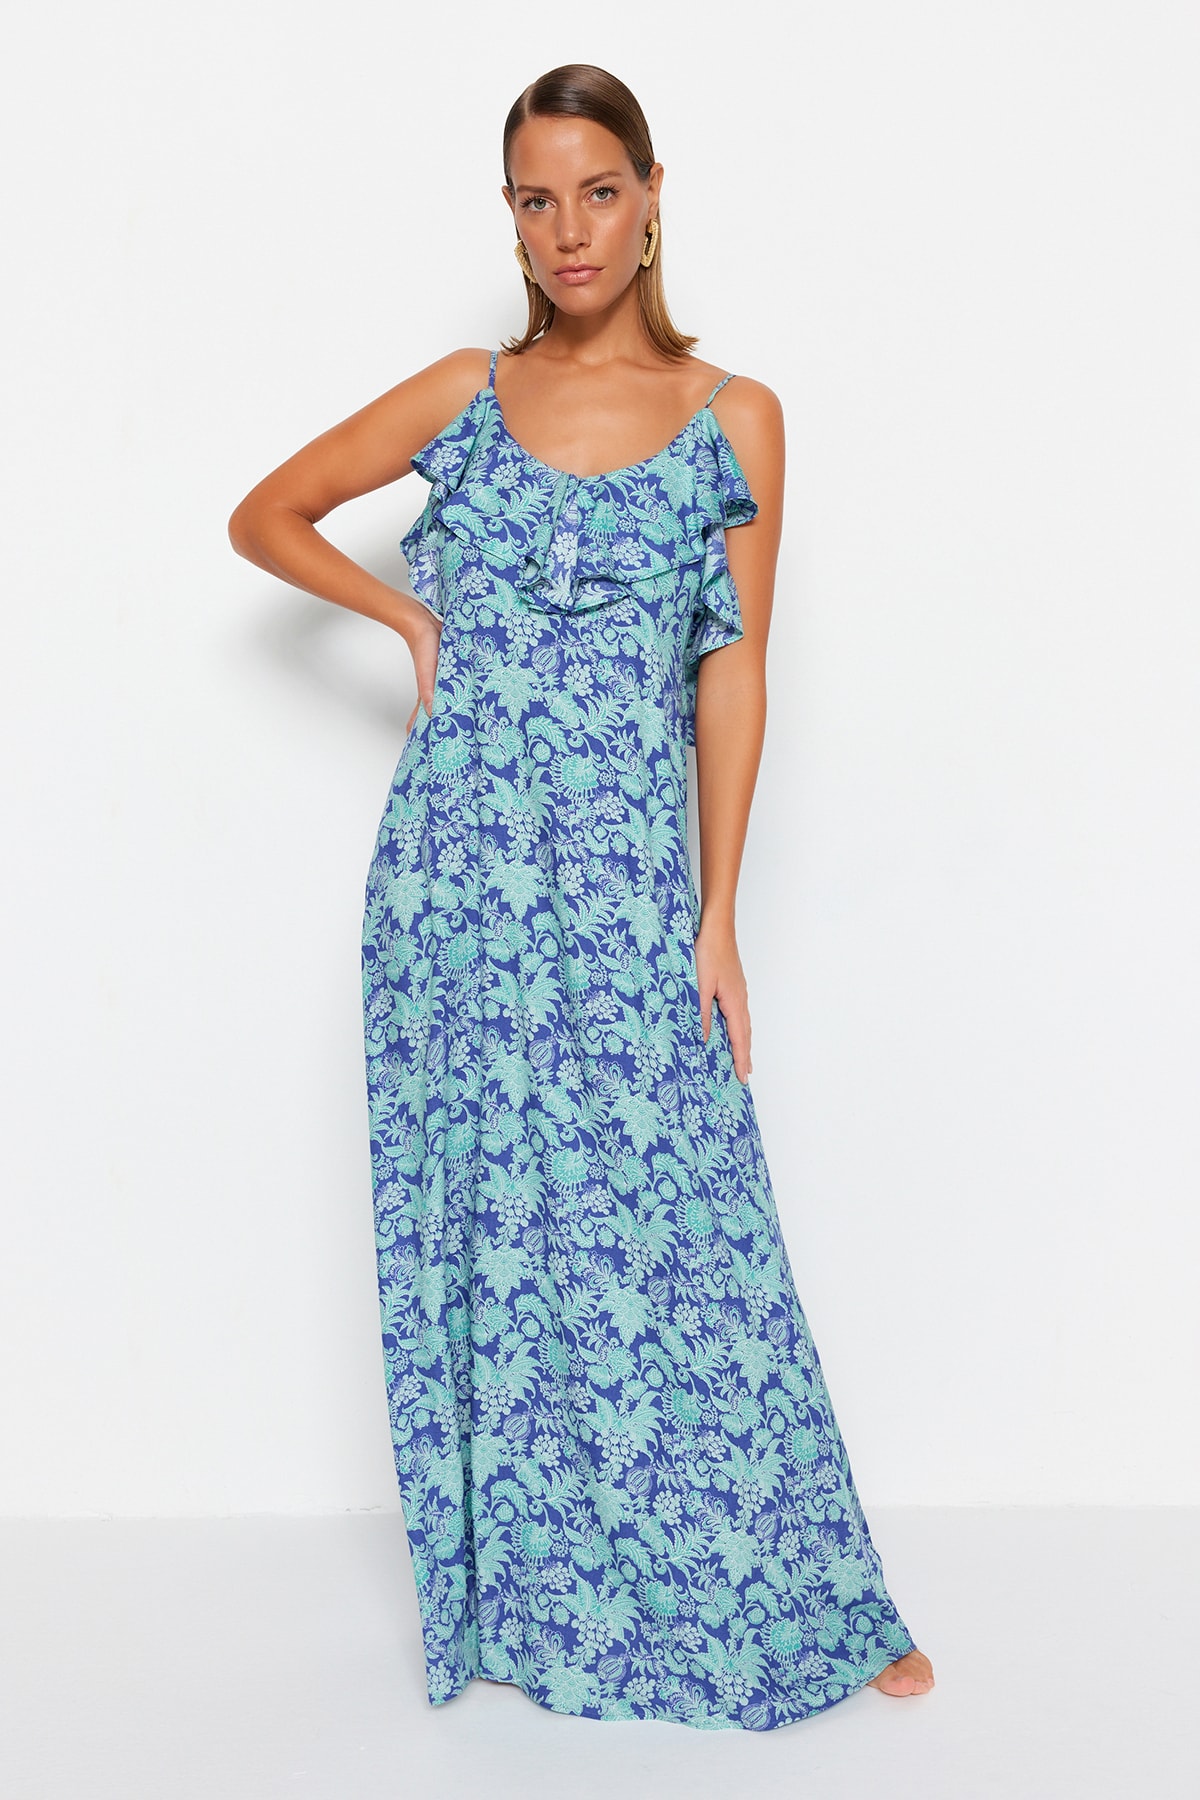 Trendyol Floral Patterned Maxi Woven Flounce Beach Dress